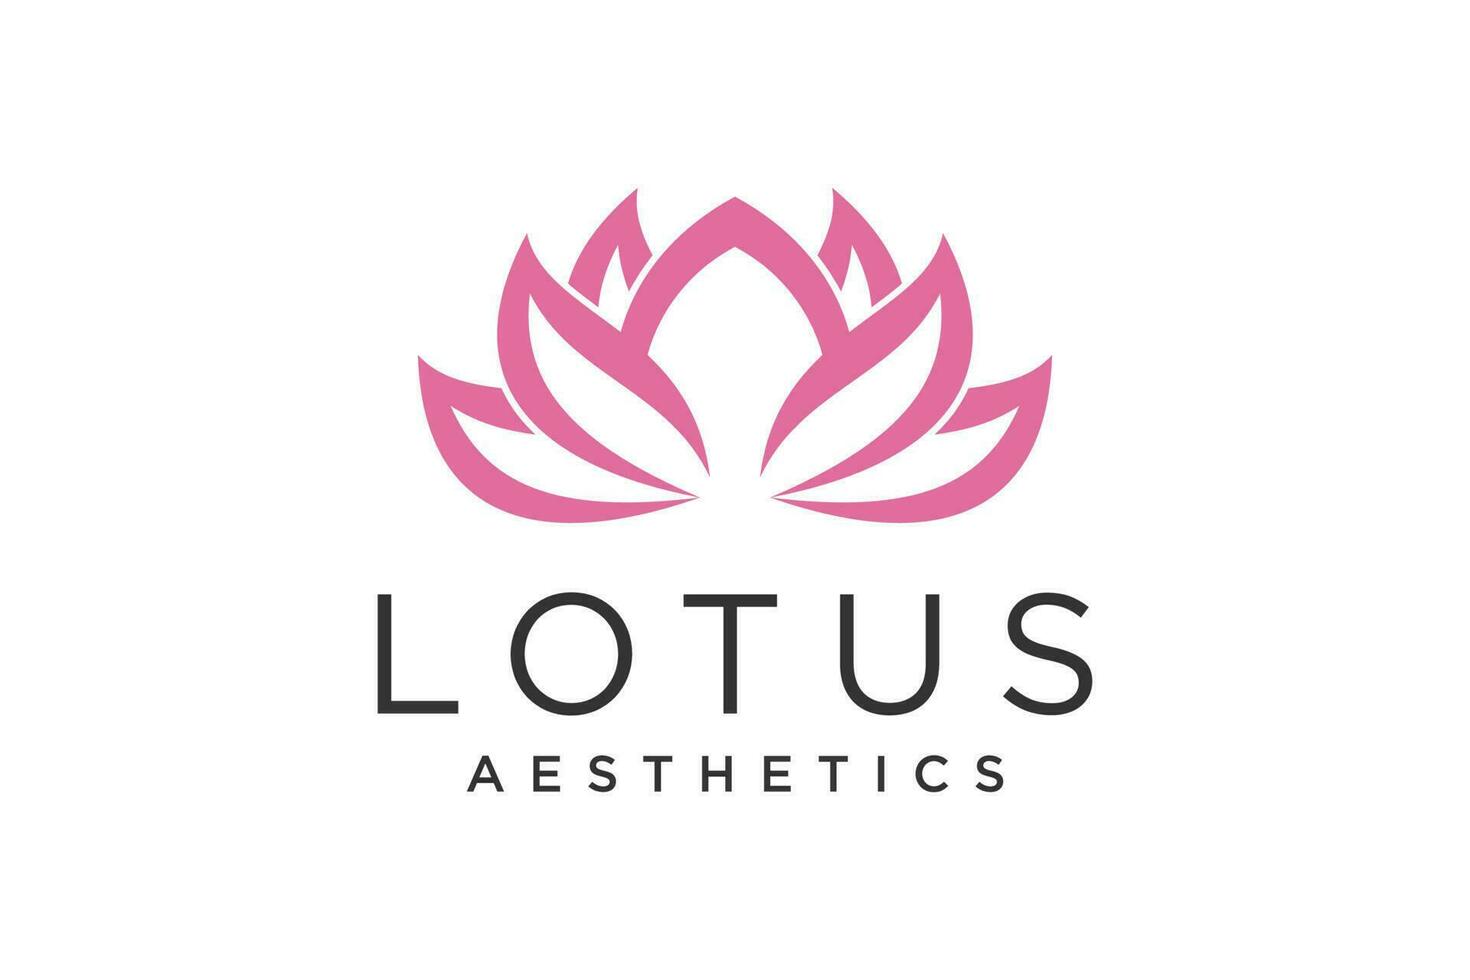 Lotus flower logo. Vector design template of lotus icons.